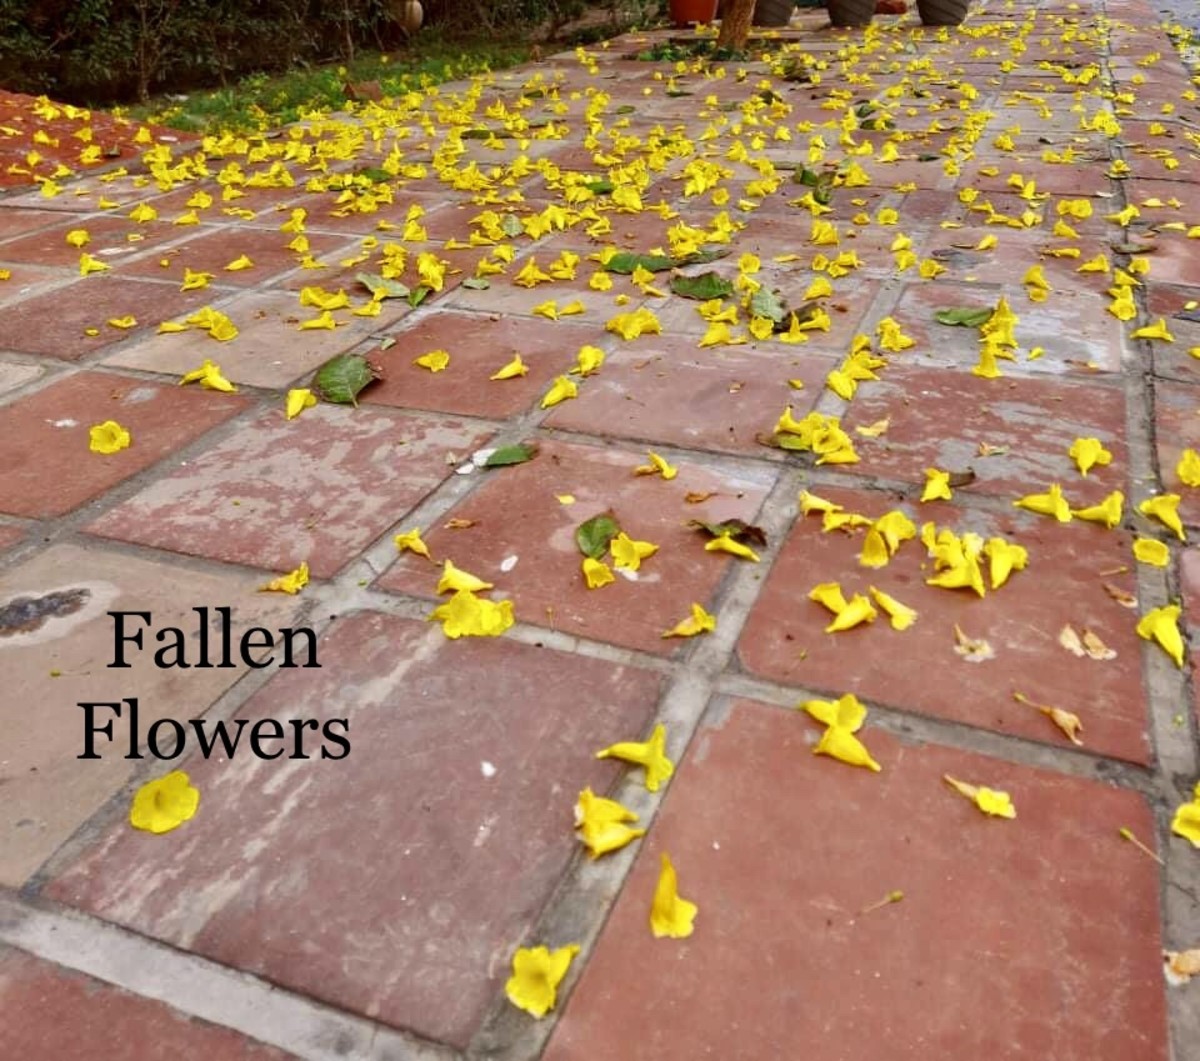 Fallen Flowers make you think—-